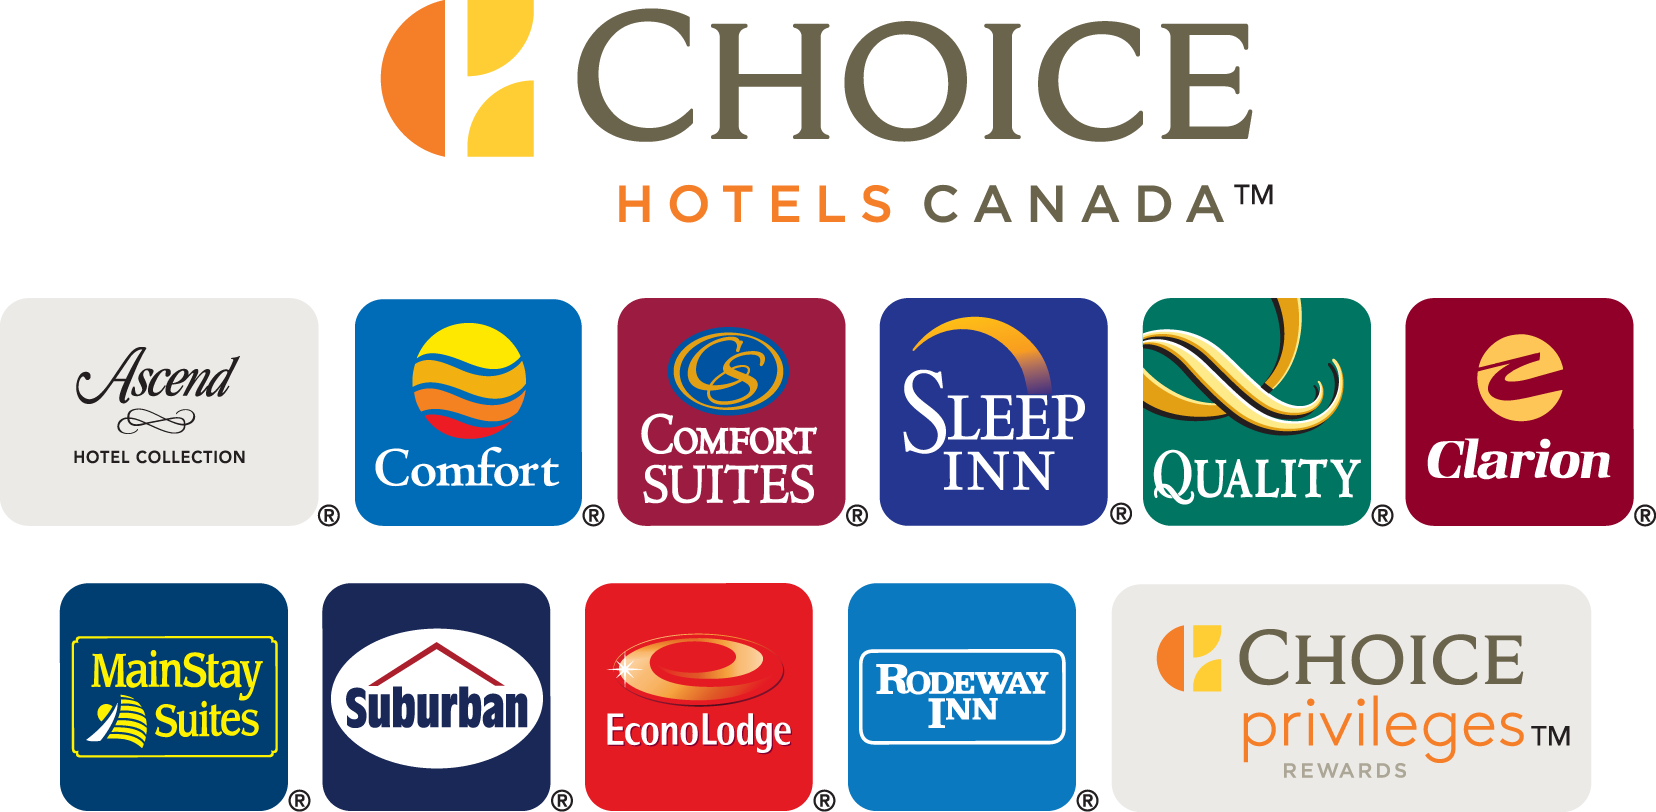 Choice-Hotels-Canada-logo2 - Alpha Kappa Psi